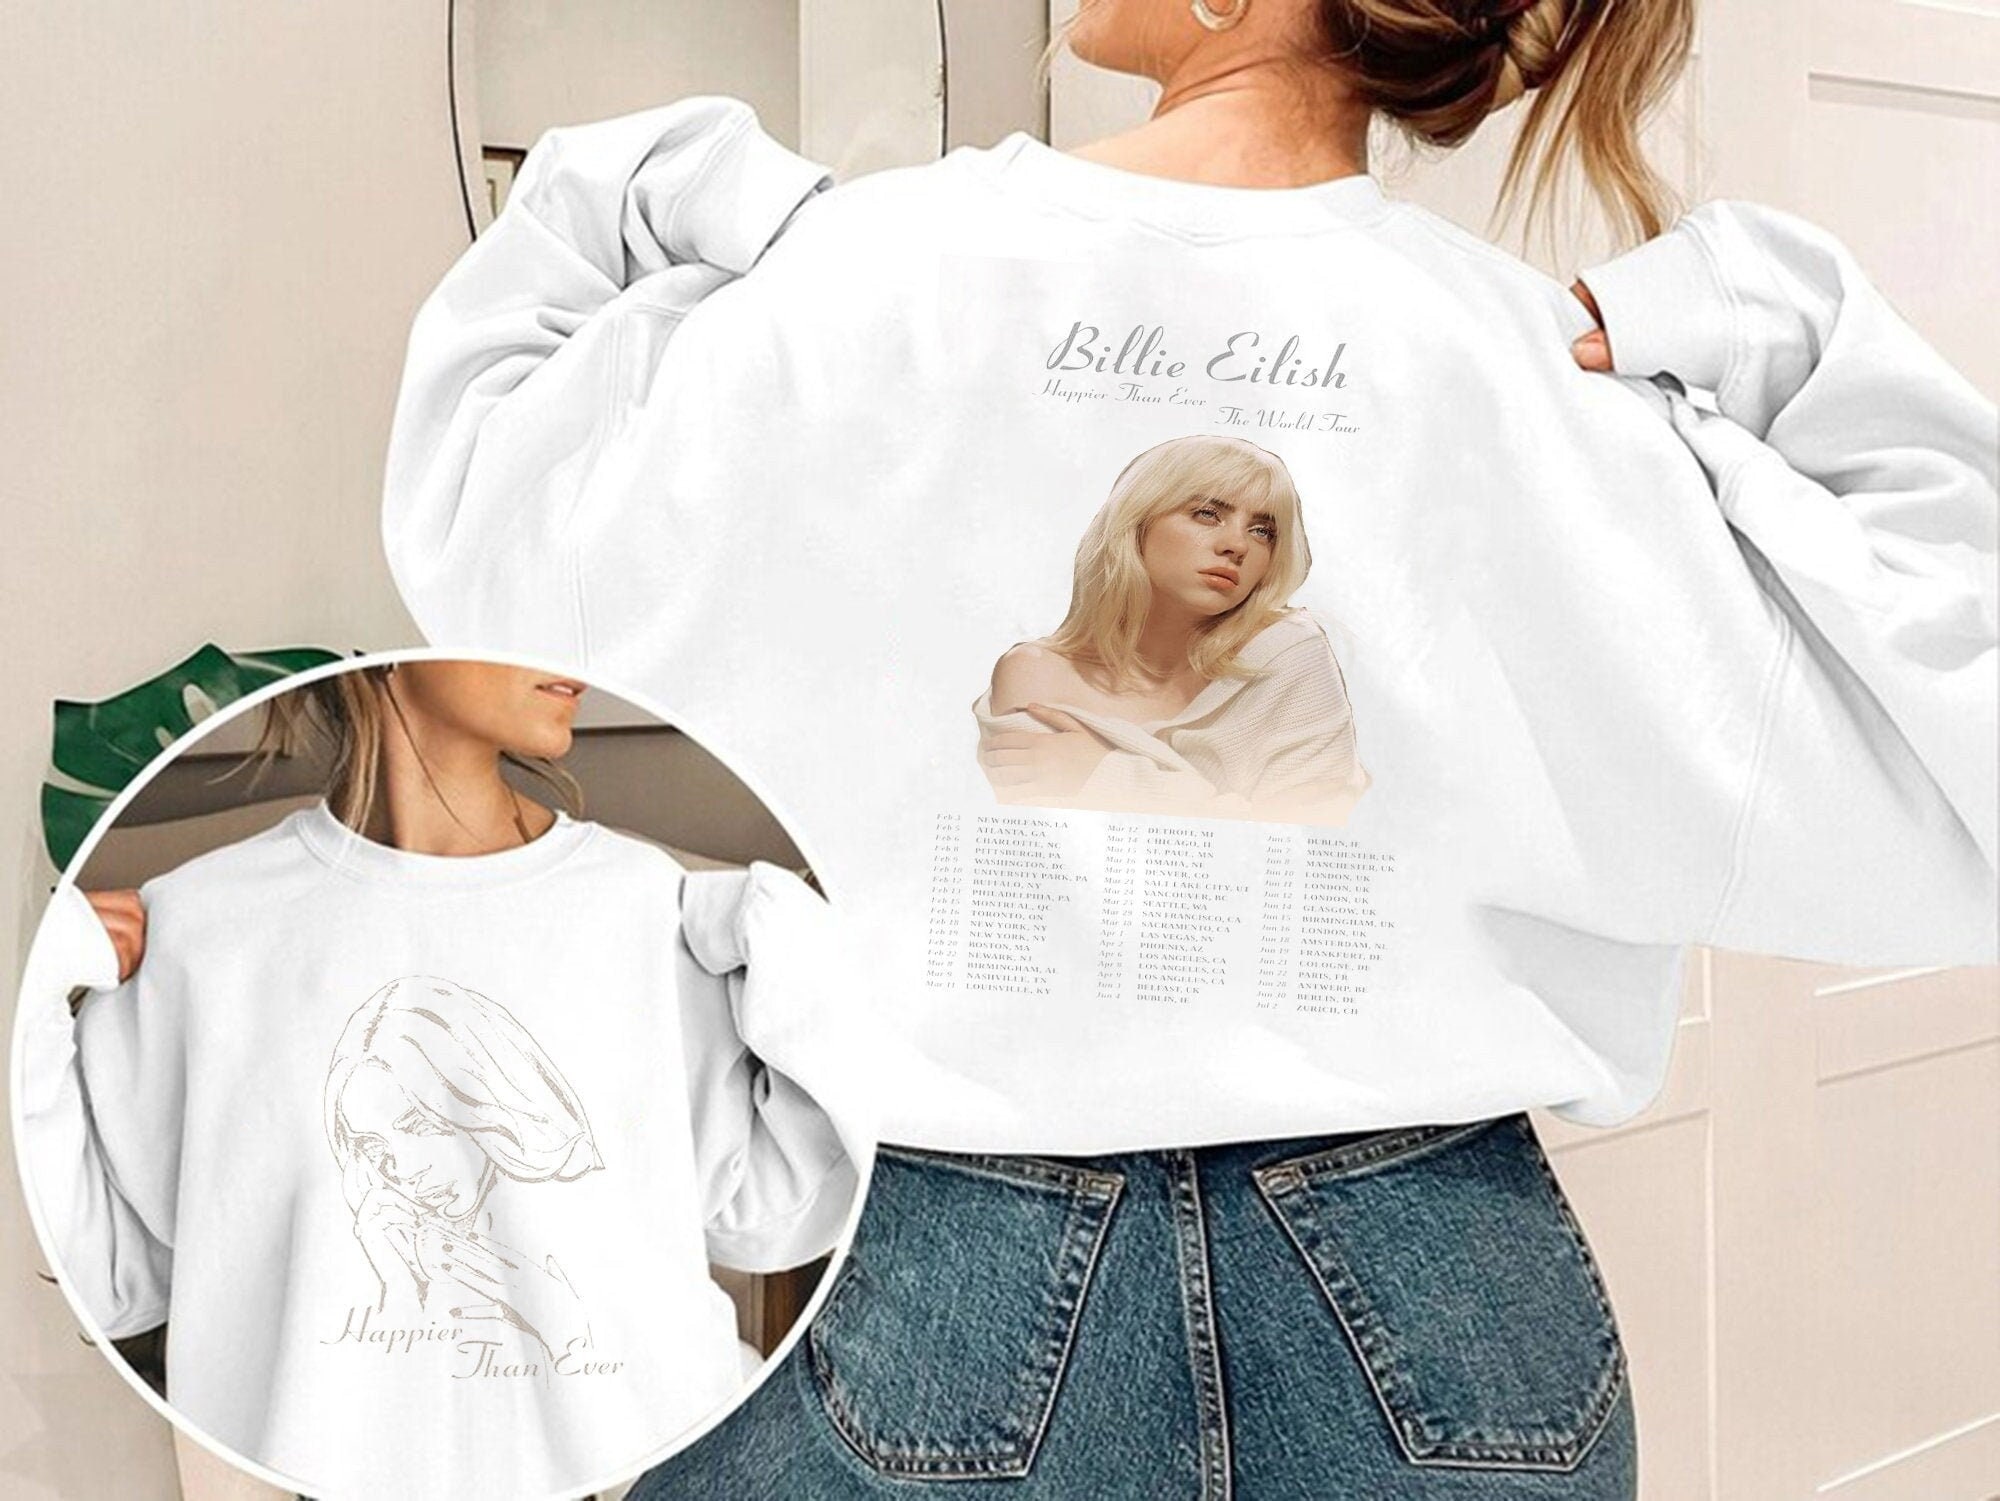 Discover Billie Eilish Vintage 2 sides Retro Shirt, Vintage Billie Eilish Shirt, Retro 90s Shirt